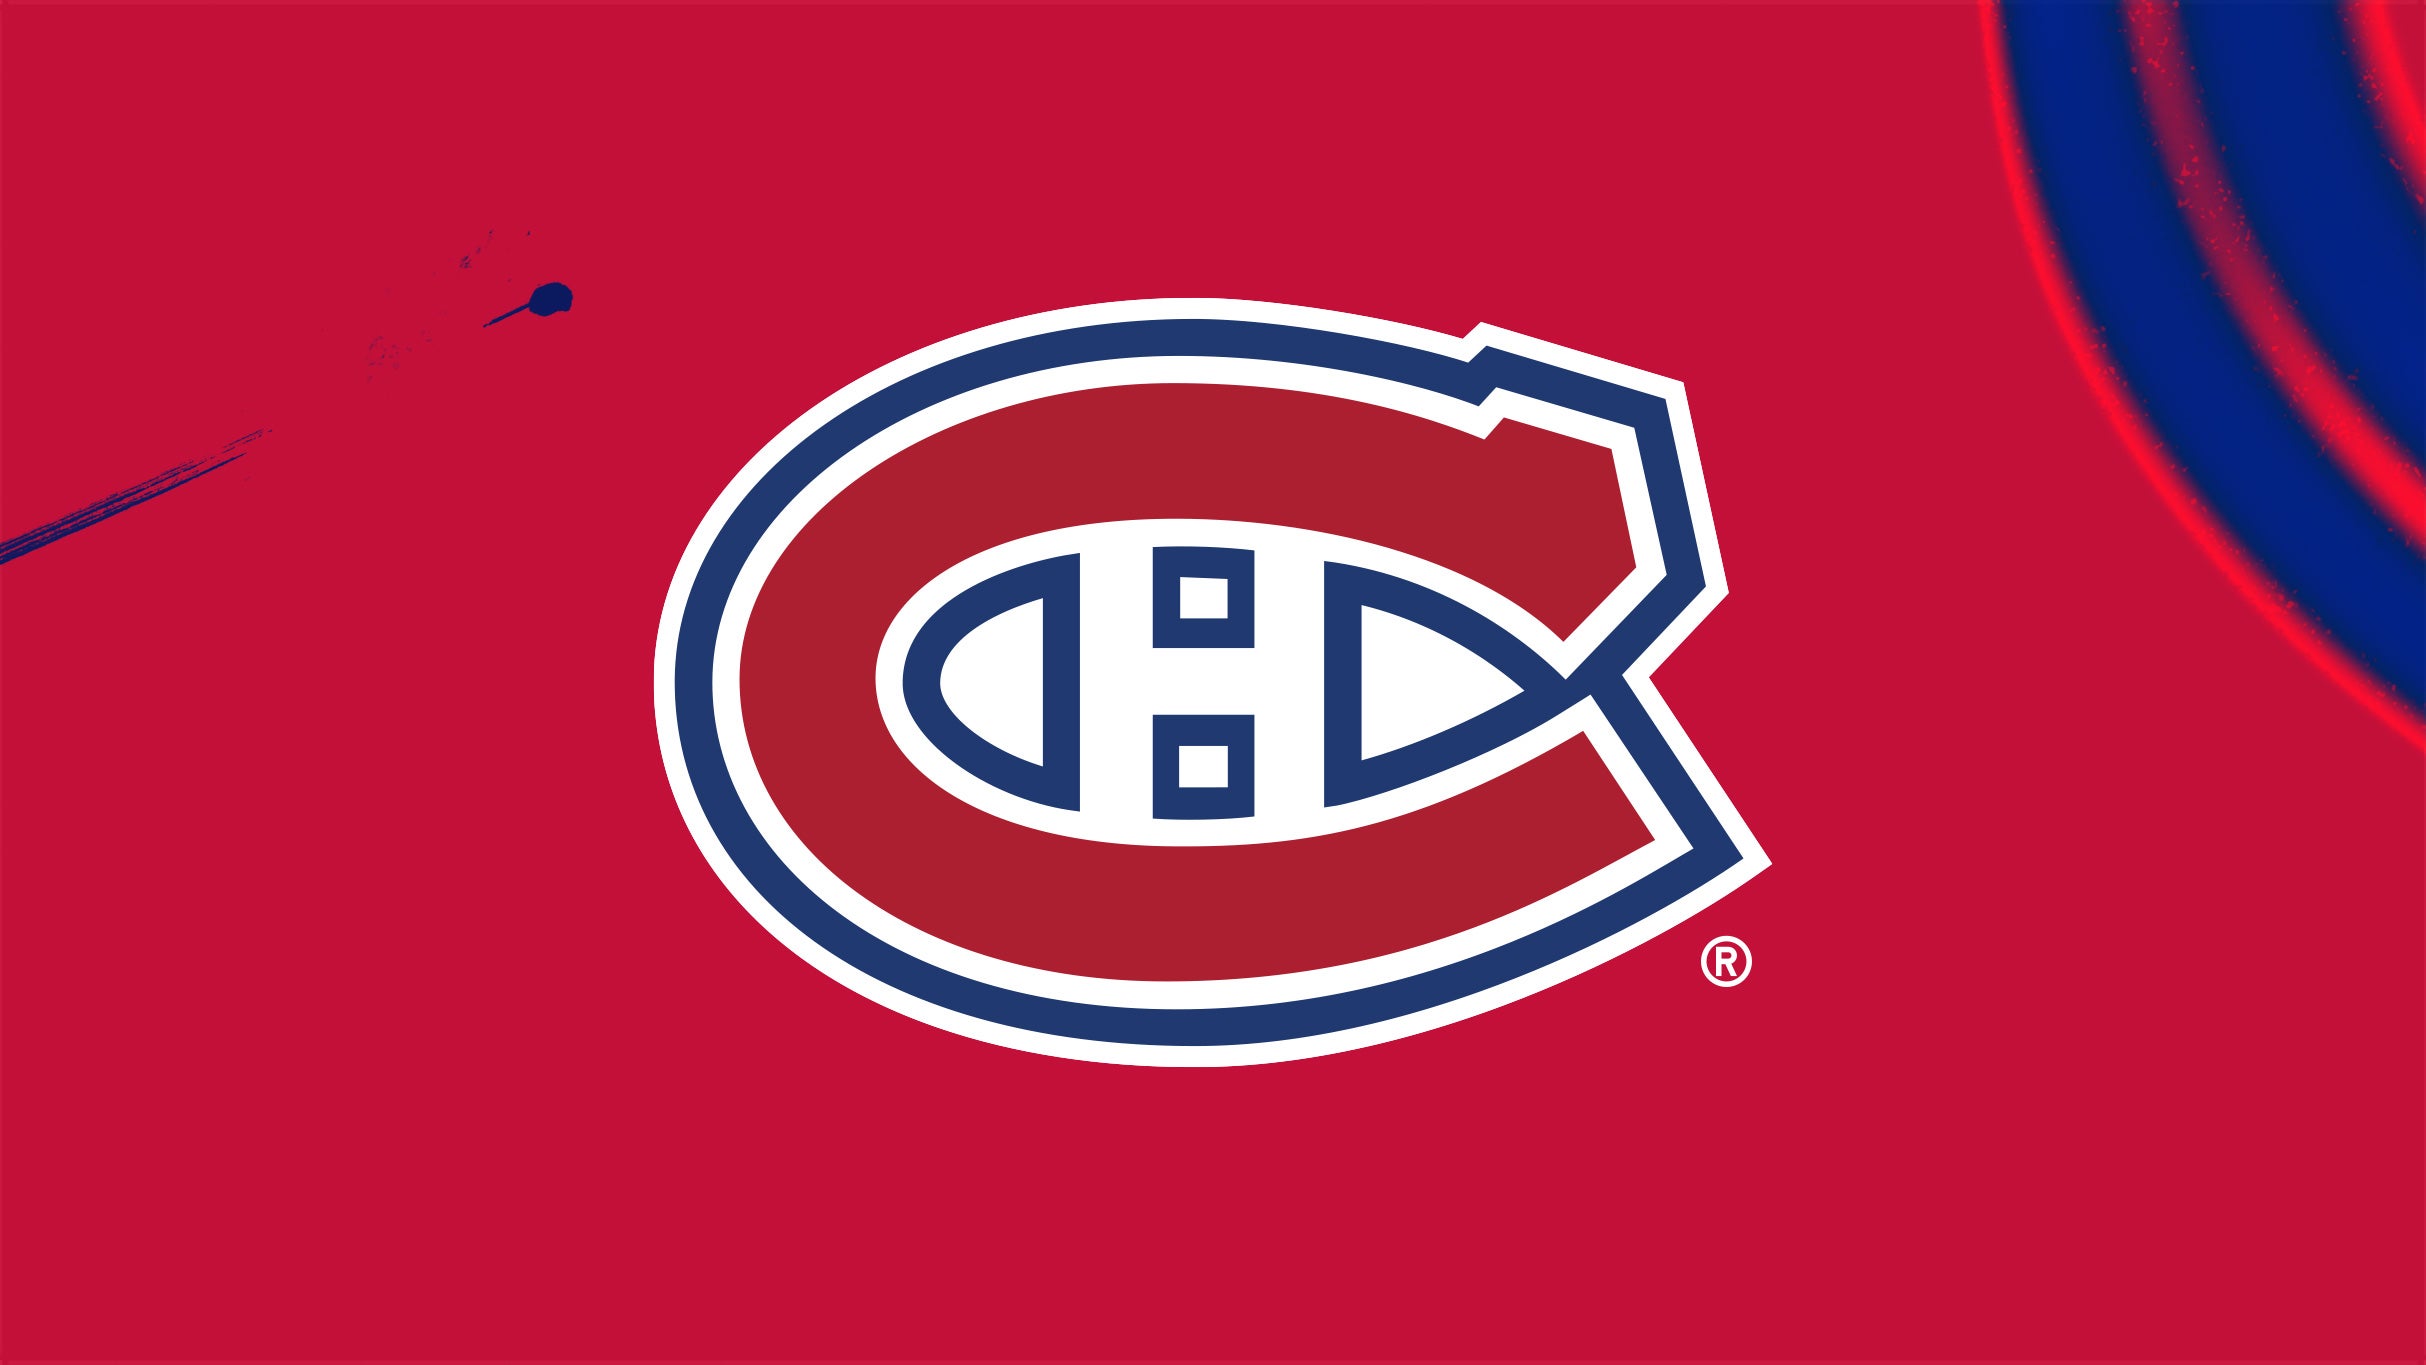 Montreal Canadiens vs. Dallas Stars in Montreal promo photo for Resale presale offer code